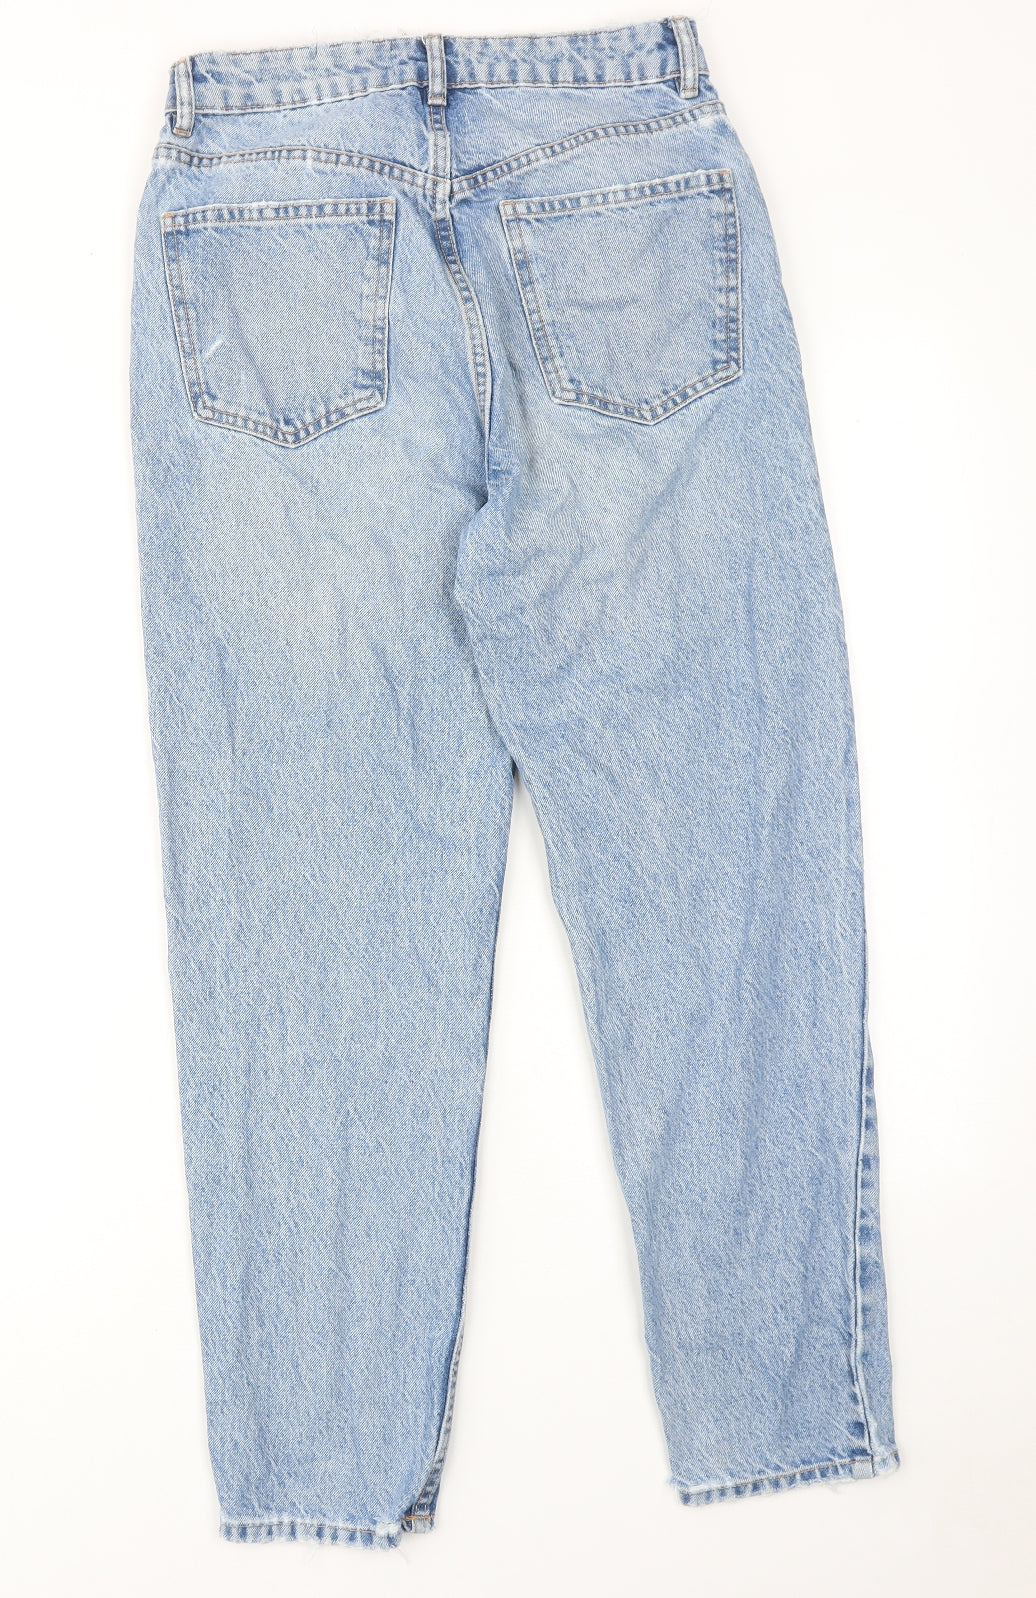 Zara Womens Blue Cotton Tapered Jeans Size 8 Regular Zip